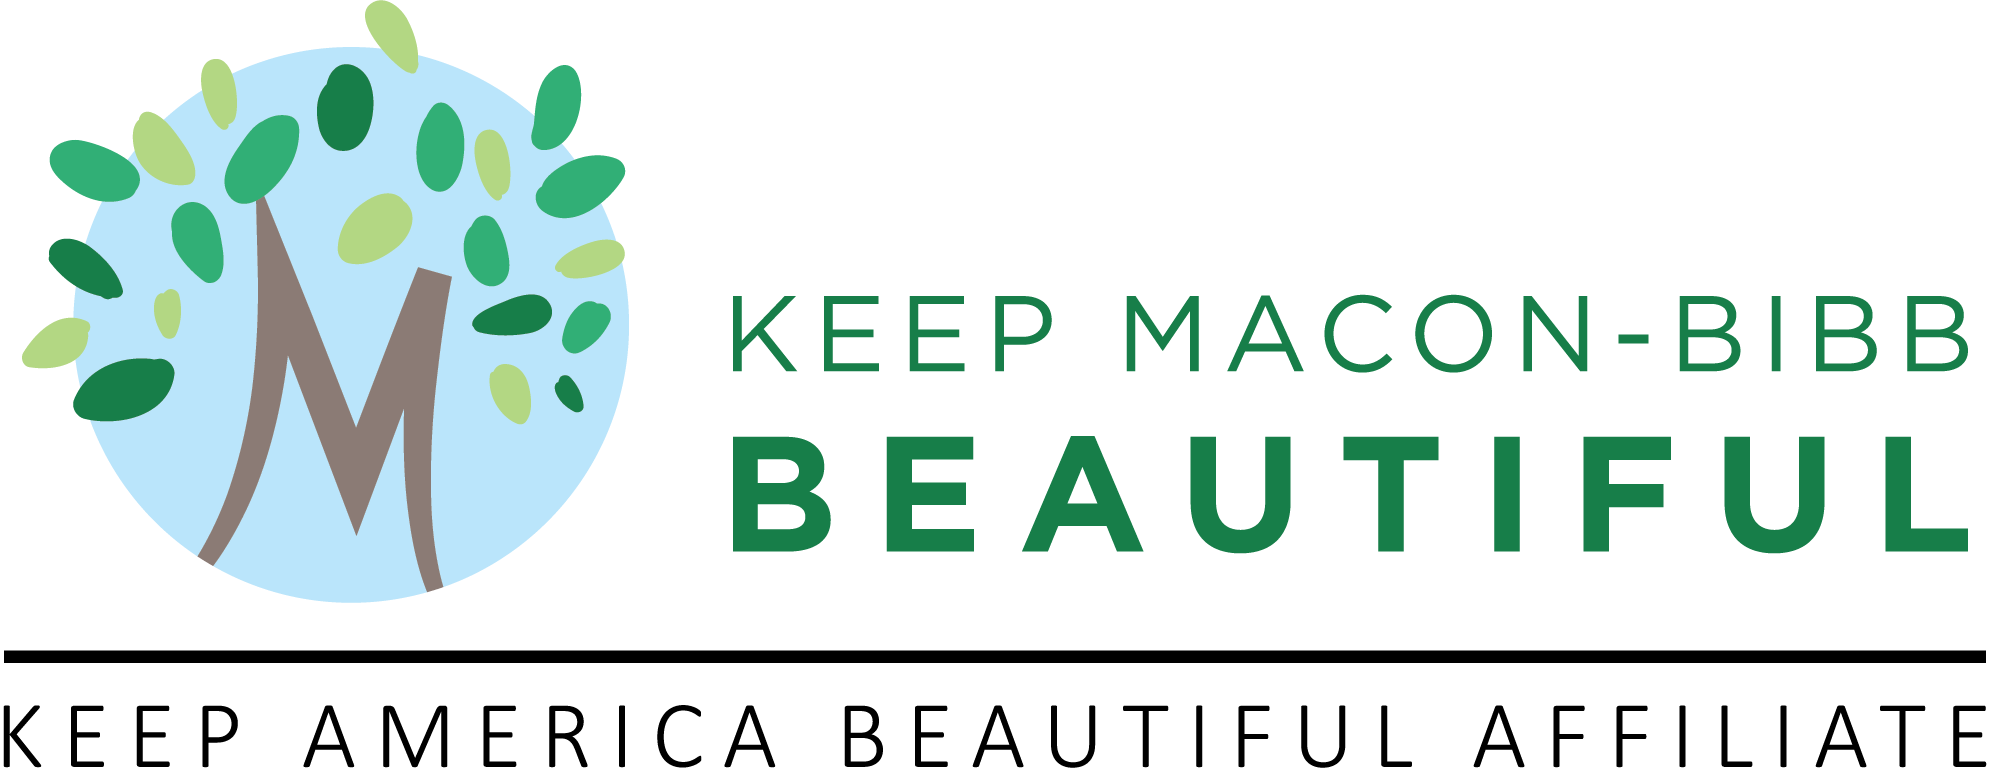 Keep Macon-Bibb Beautiful | Commission